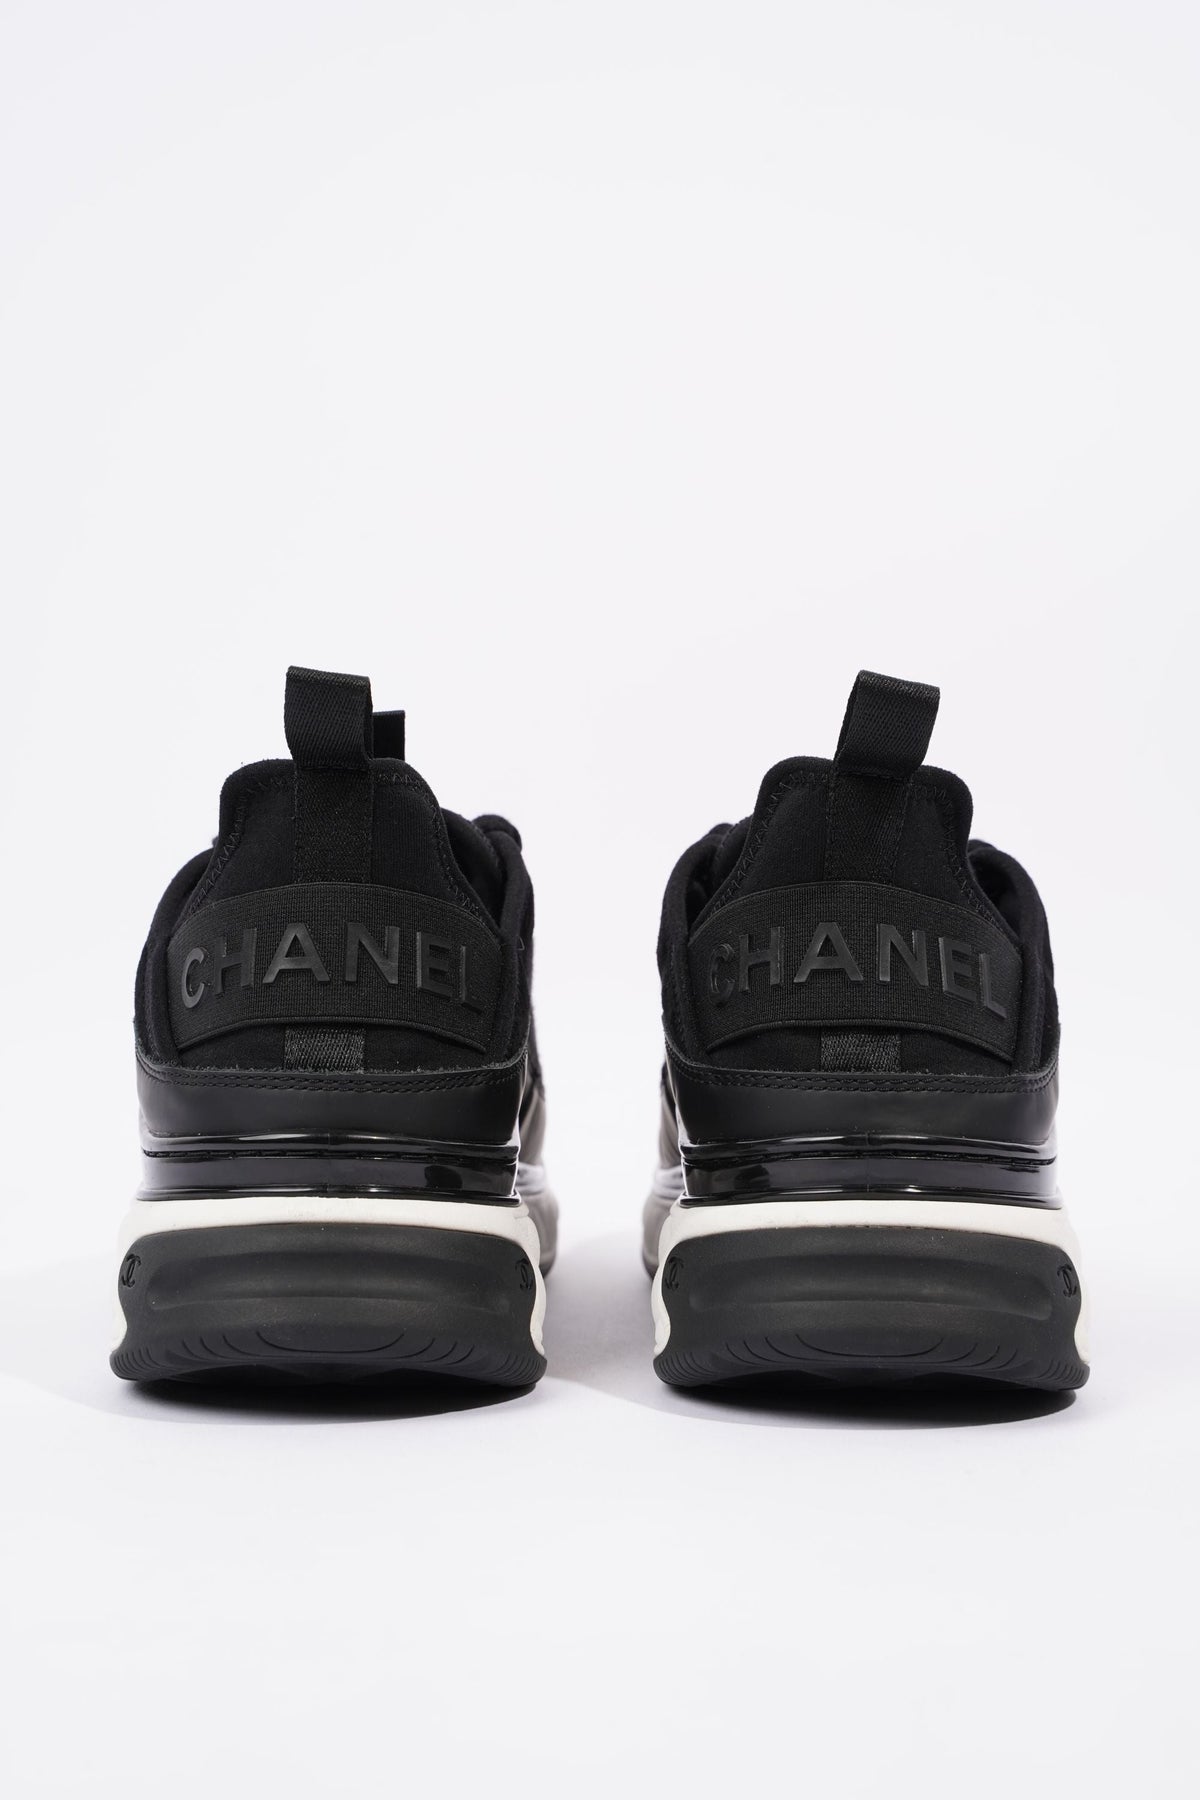 Chanel CC Logo Runners Black / White EU 40 / UK 7 – Luxe Collective